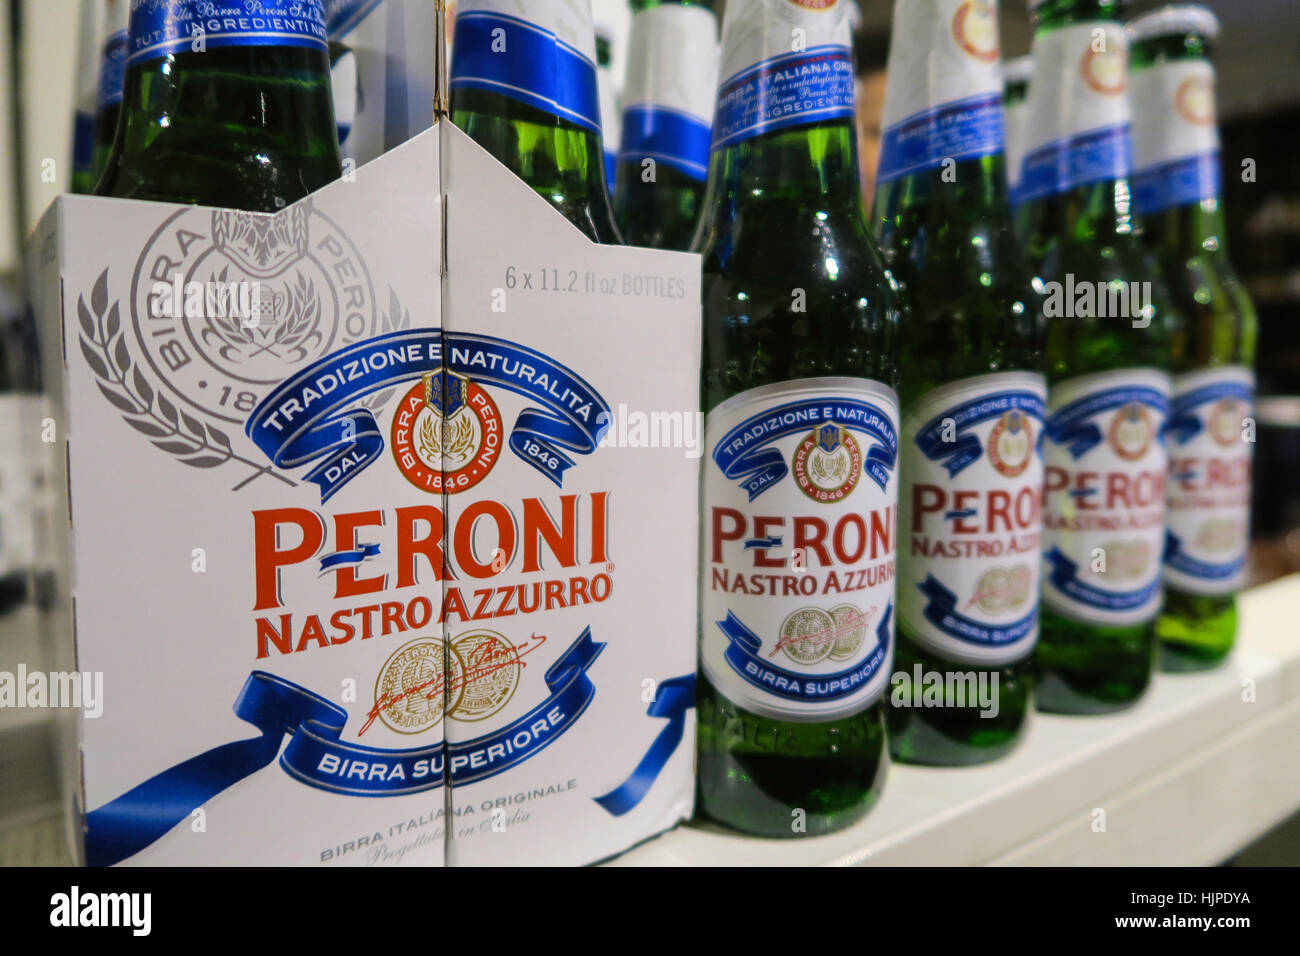 https://c8.alamy.com/comp/HJPDYA/peroni-beer-bottle-display-eataly-italian-marketplace-nyc-HJPDYA.jpg